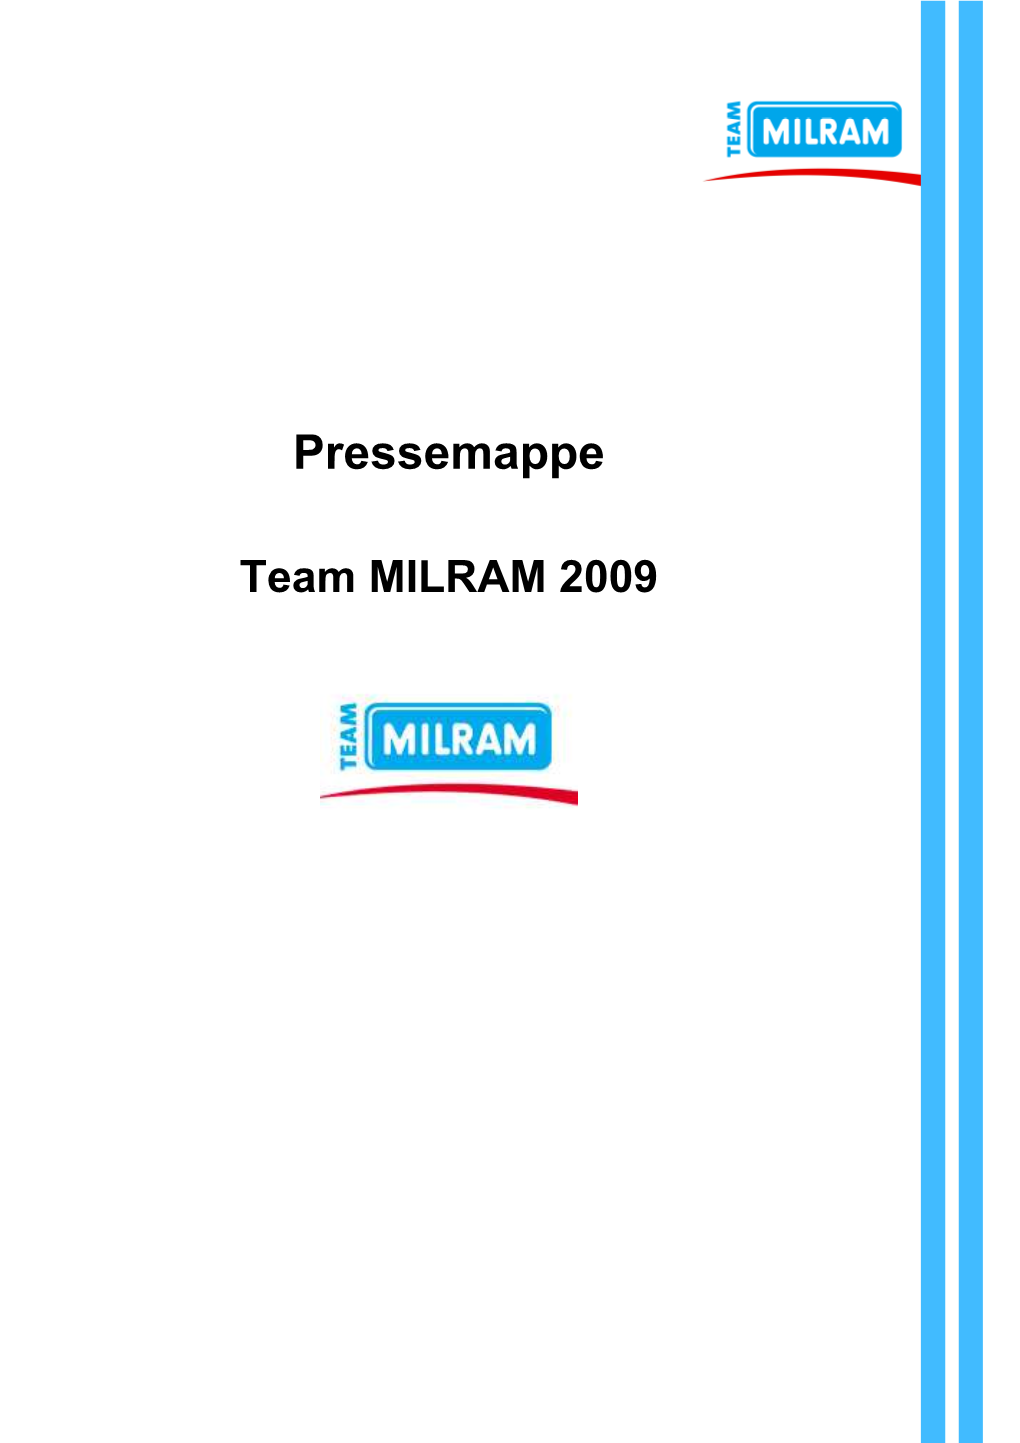 090105 Pressemappe Team MILRAM 2009